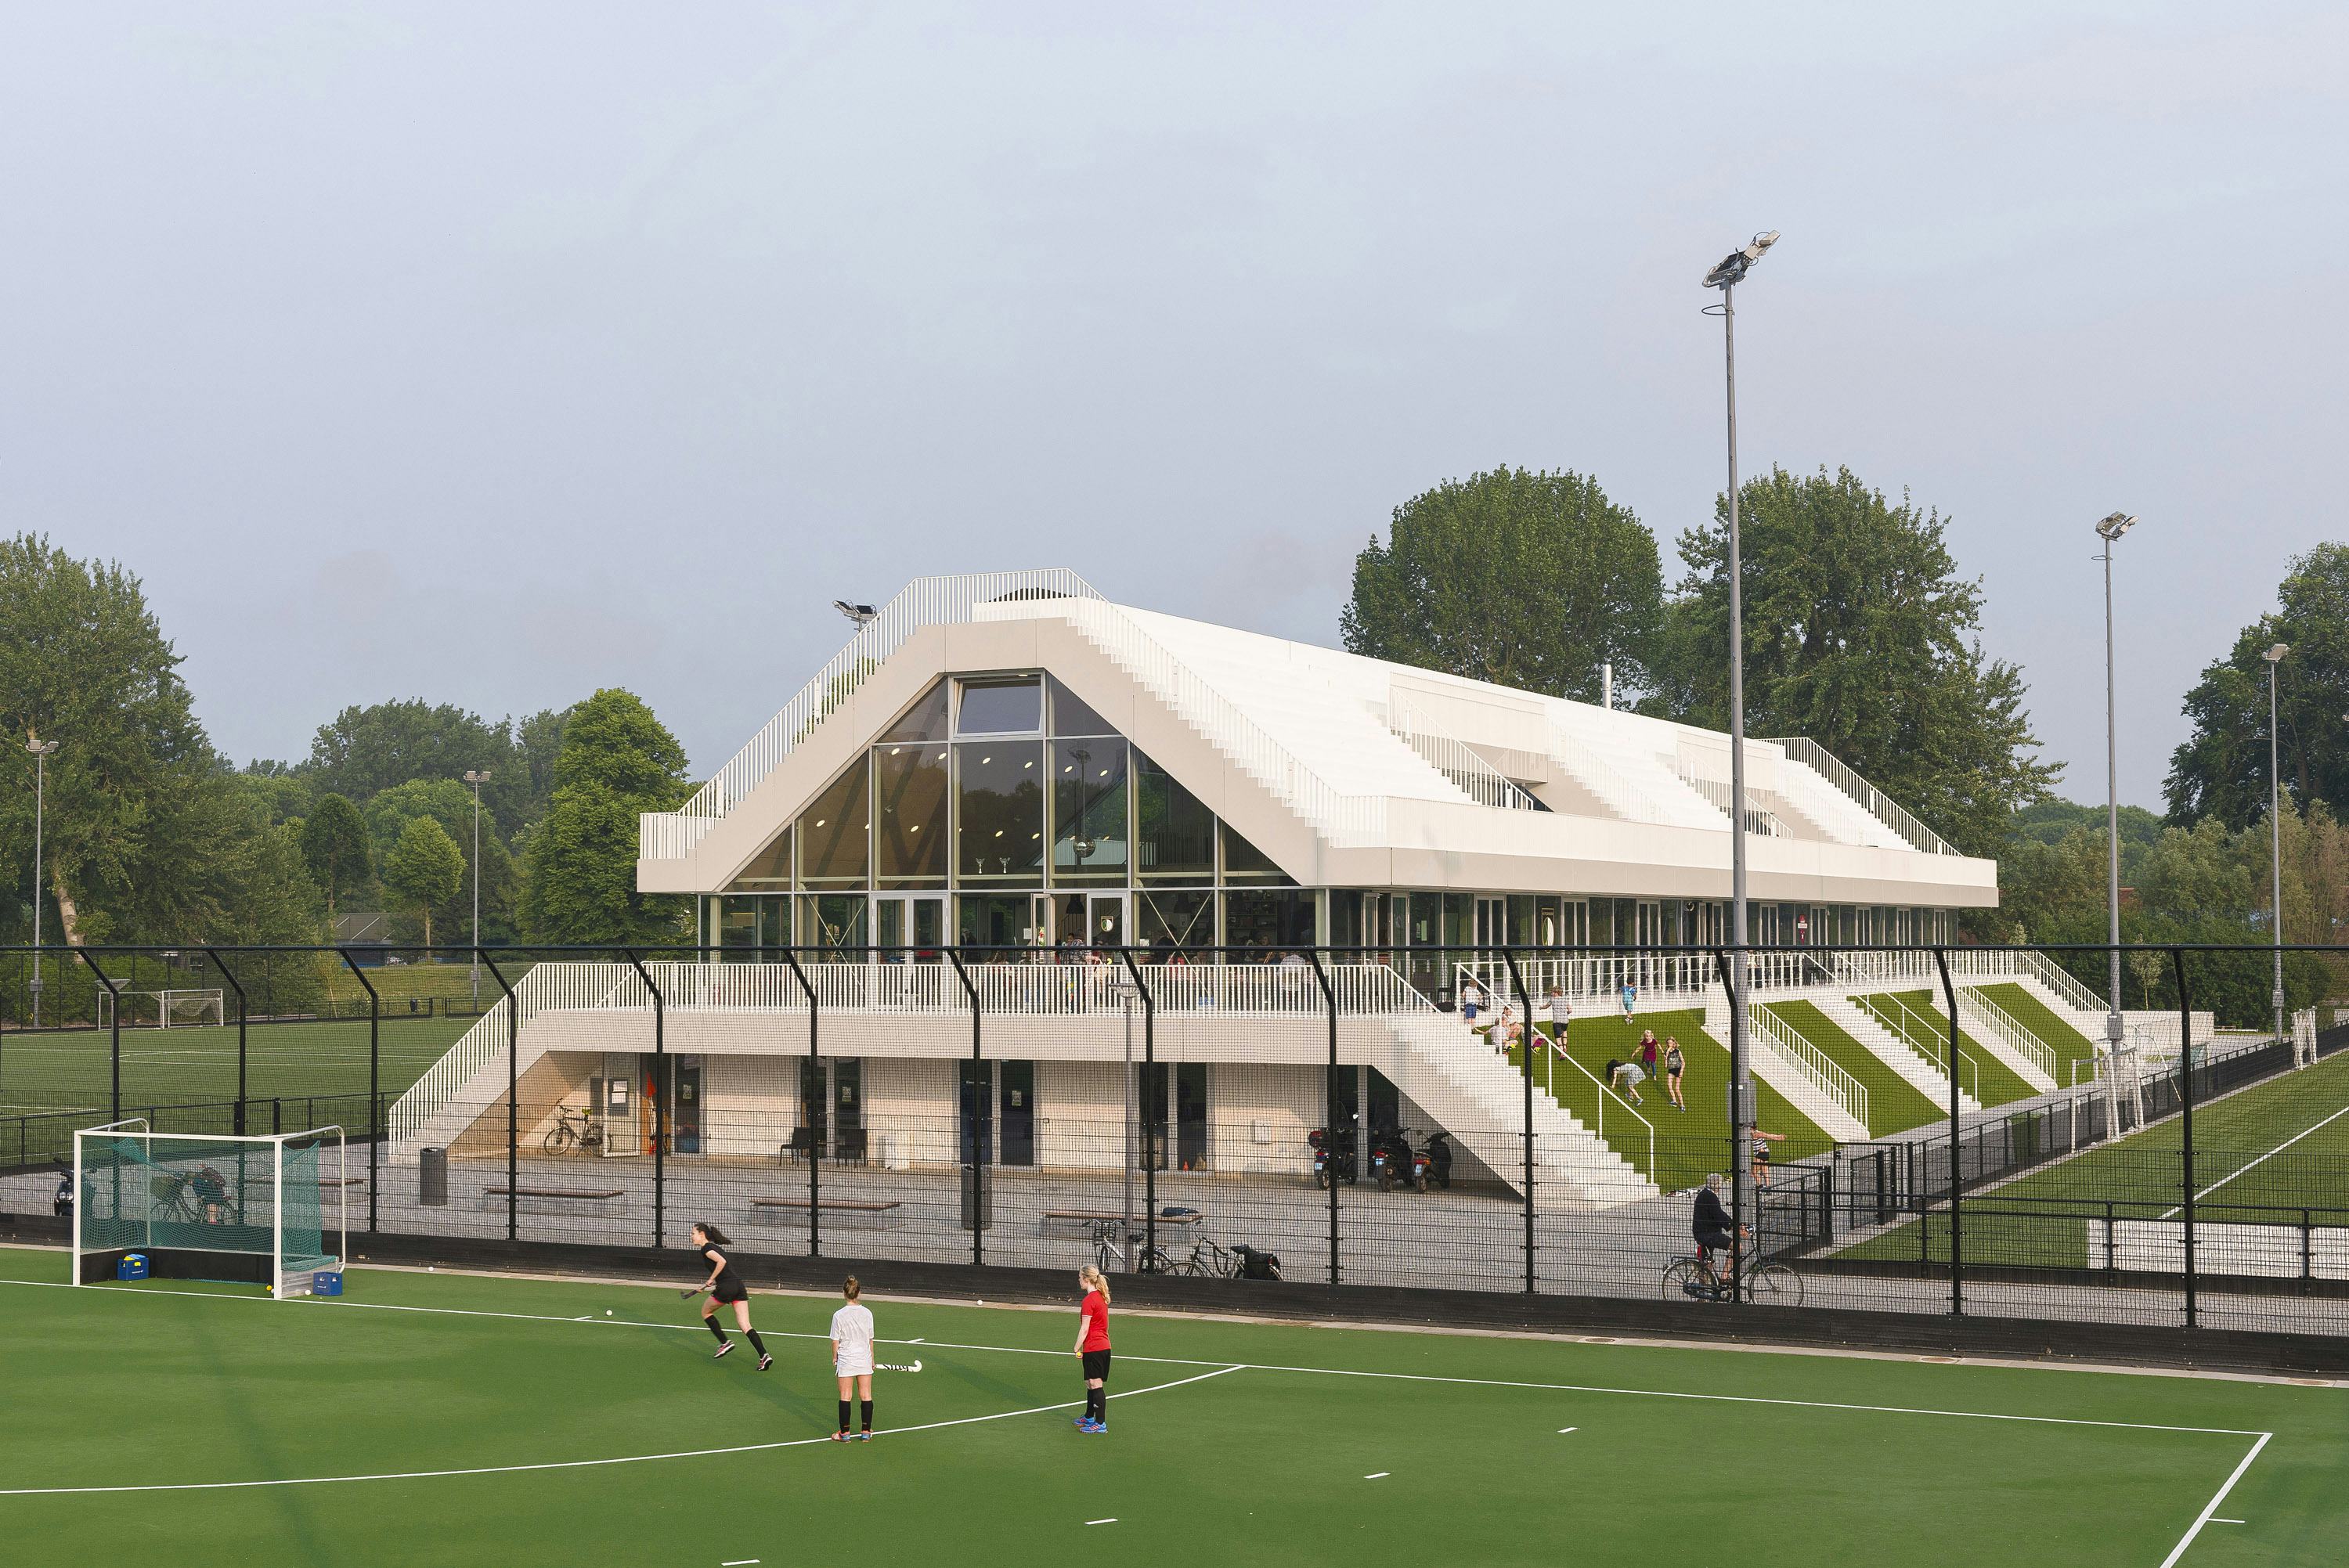 Clubverzamelgebouw Varkenoord Rotterdam - NL Architects, beeld Sebastian van Damme